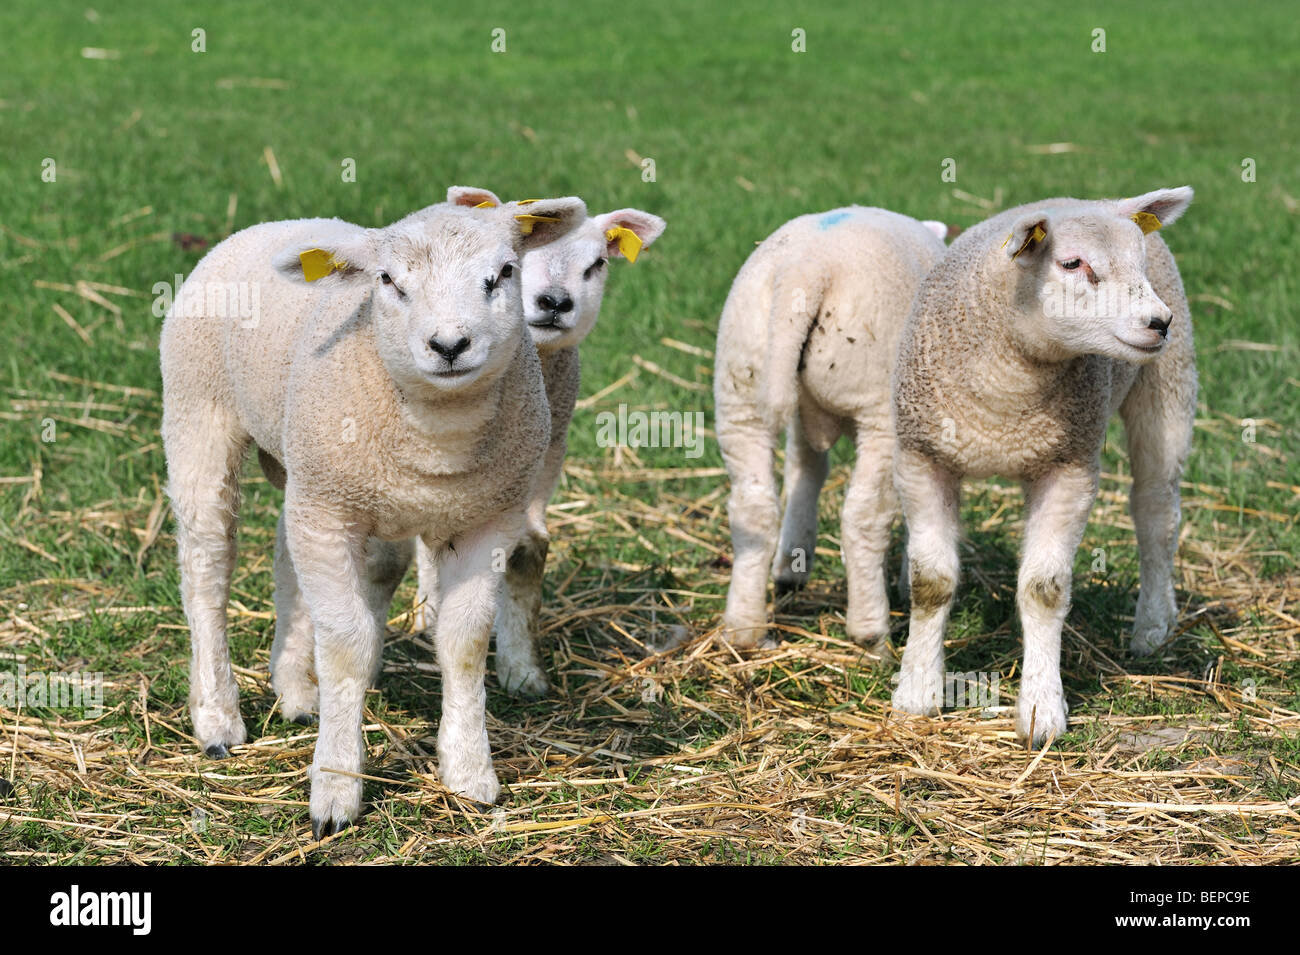 White sheep lambs (Ovis aries) in grassland Stock Photo